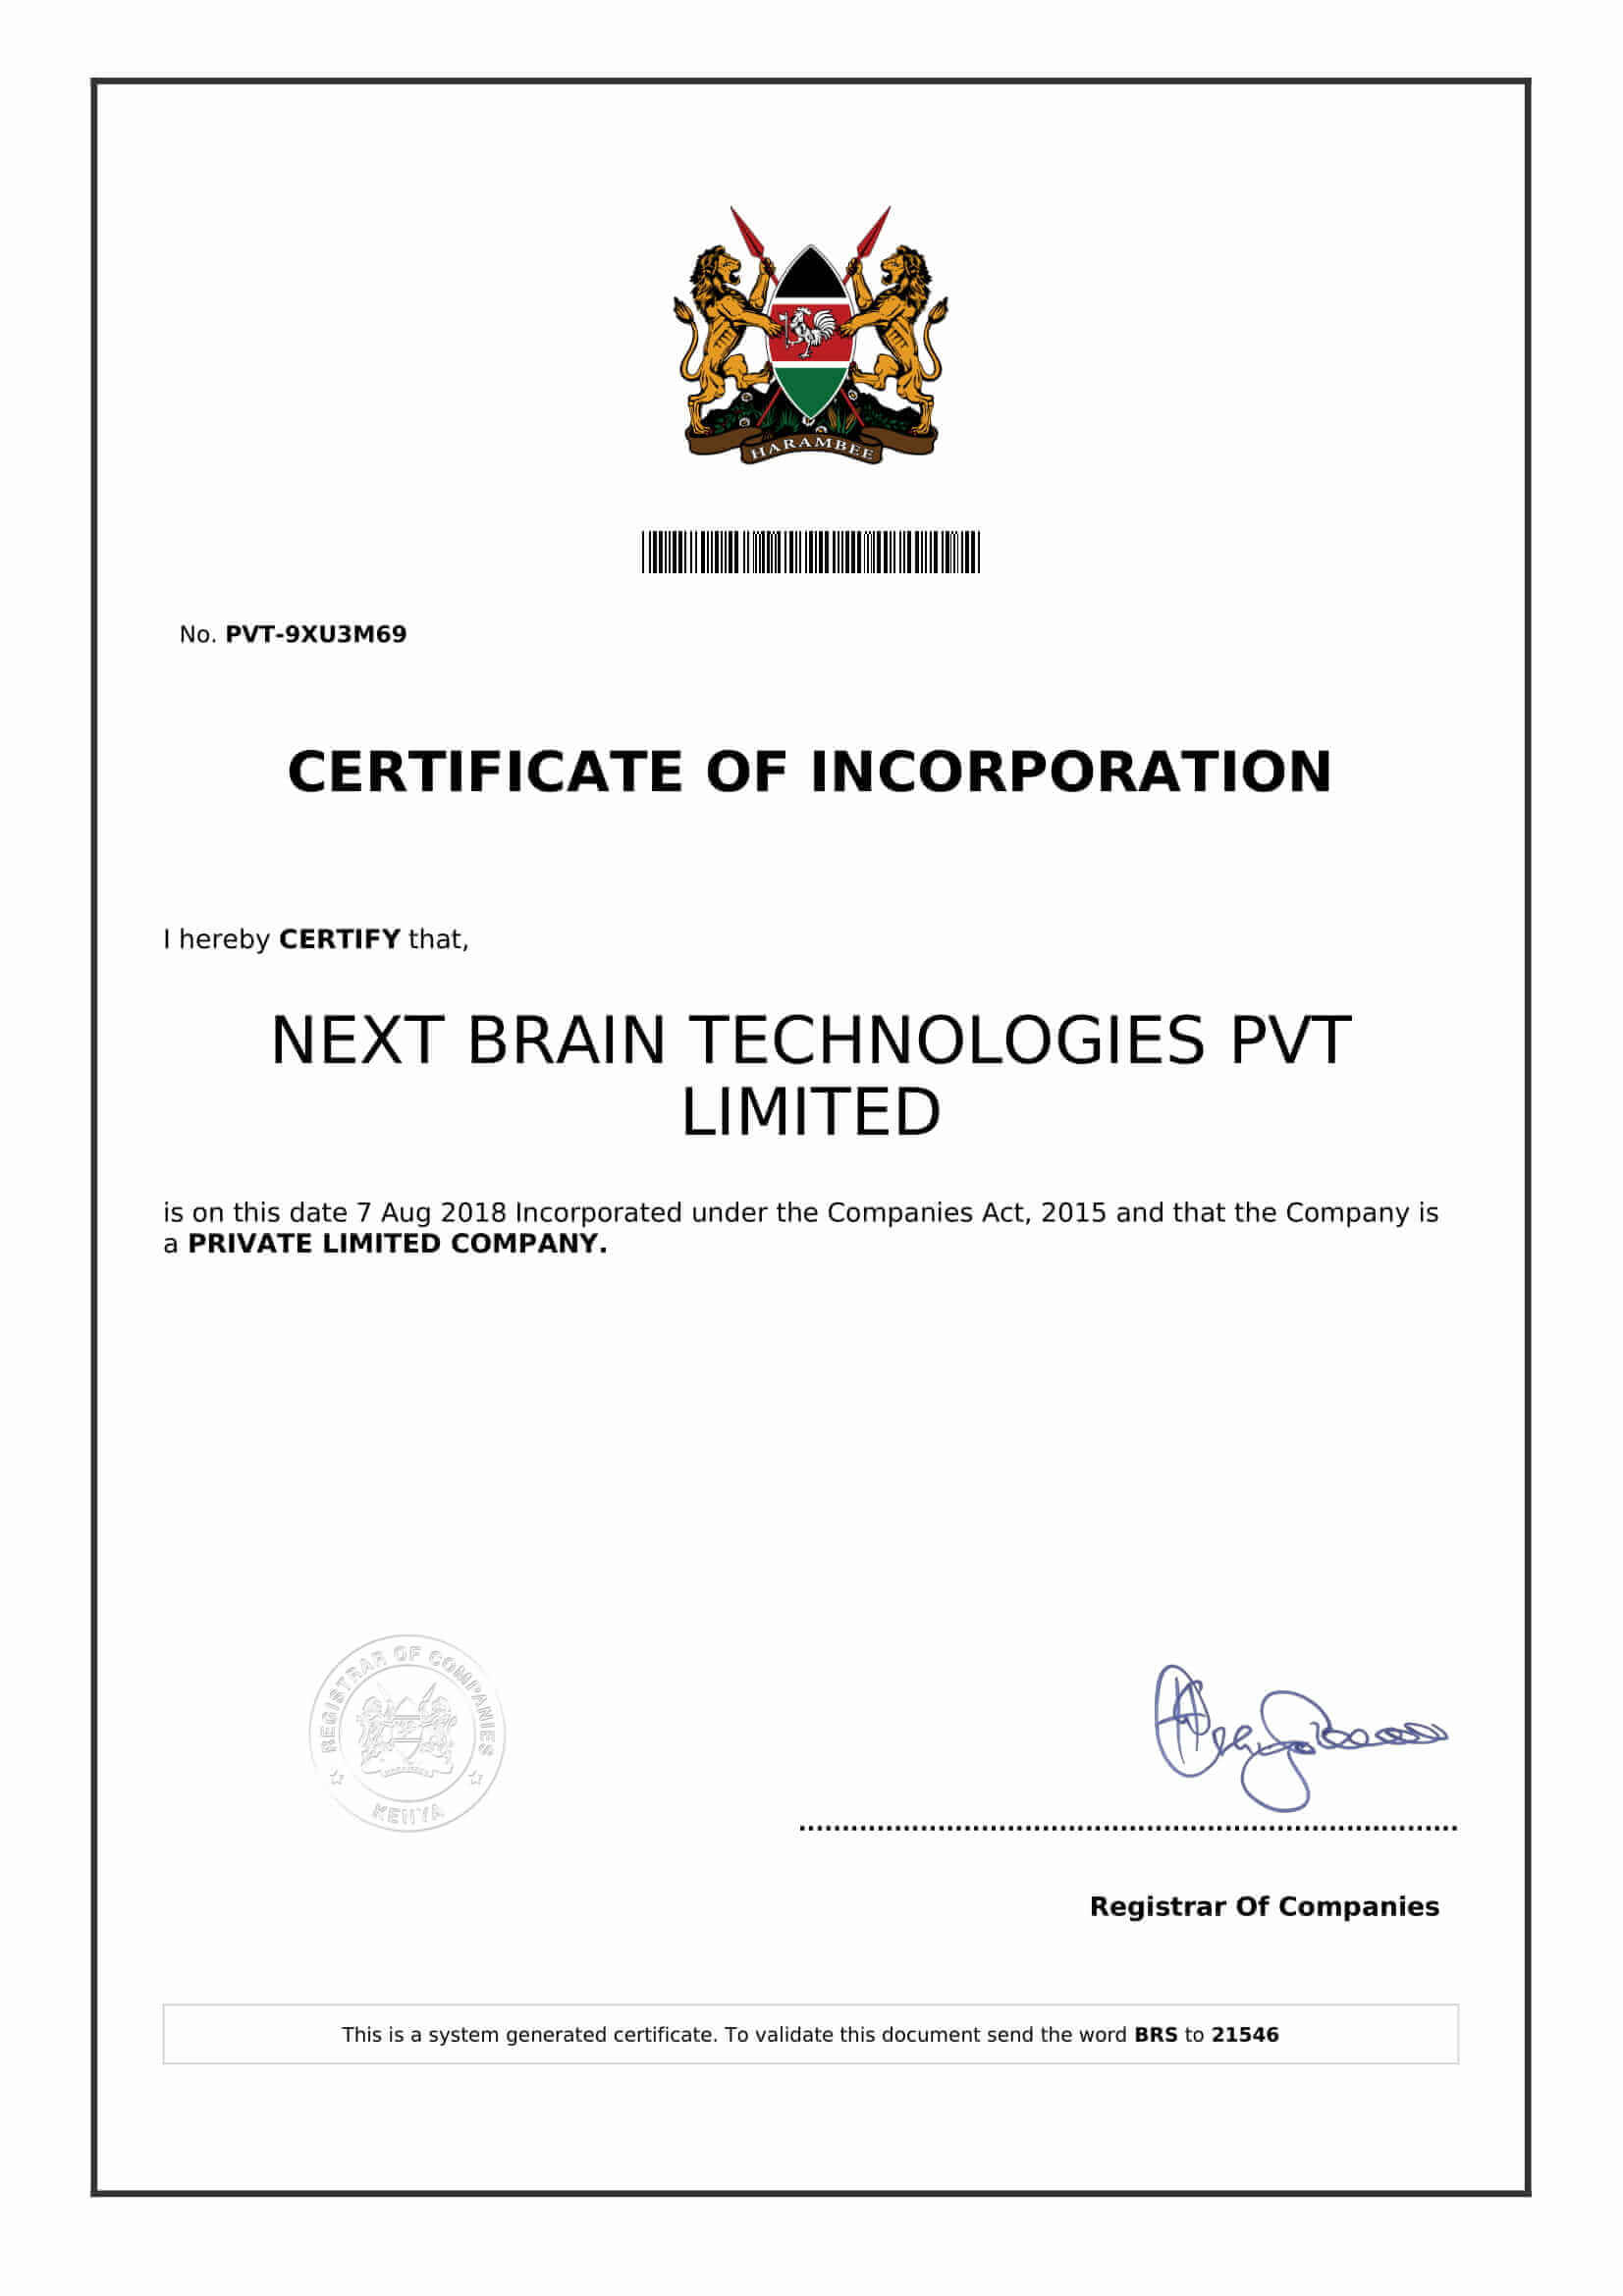 Nextbrain office registration certificate kenya